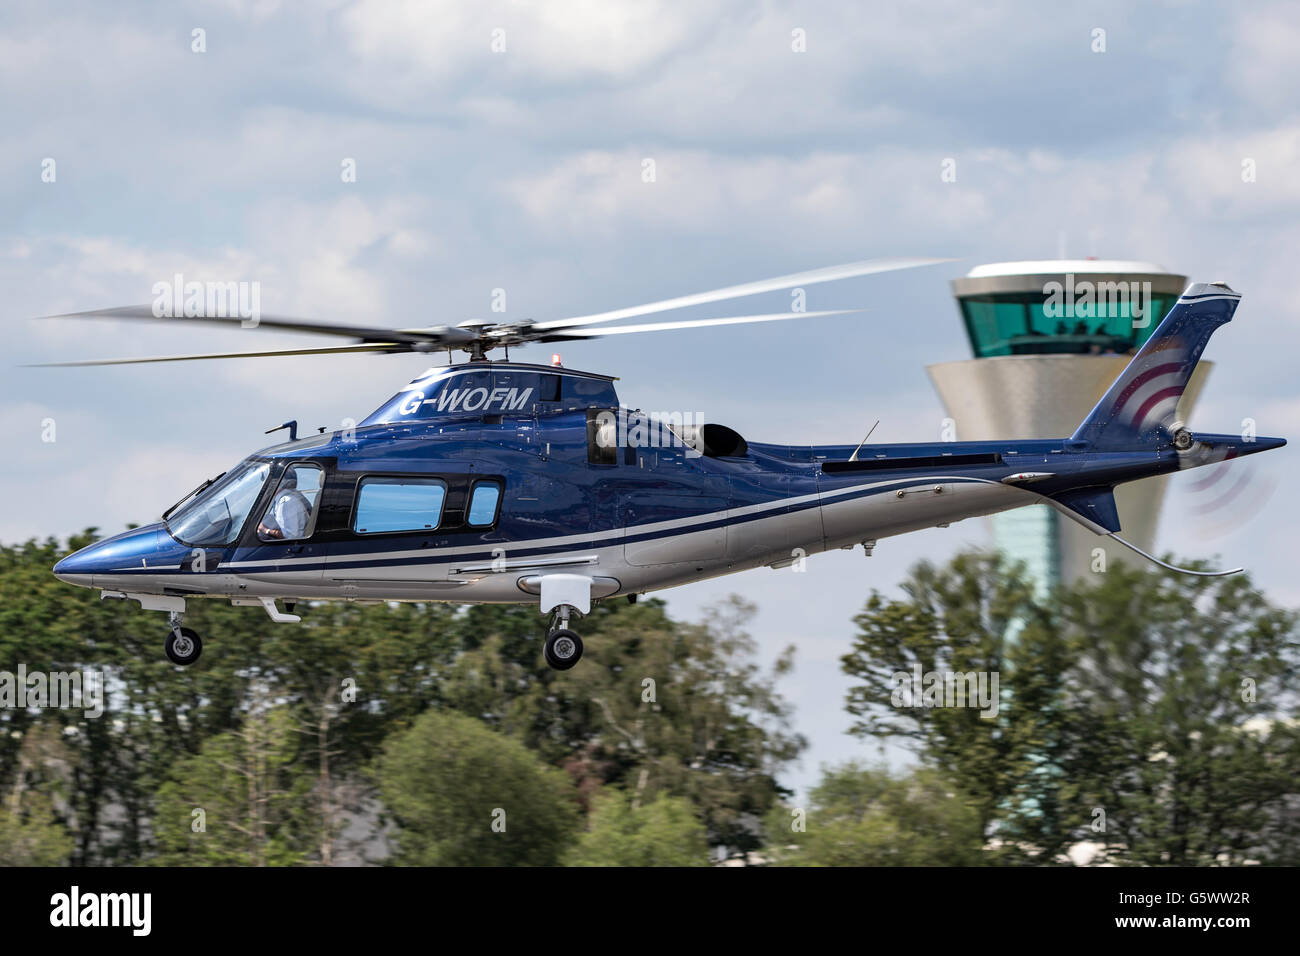 AgustaWestland AW-109E Helicopter G-WOFM Stock Photo